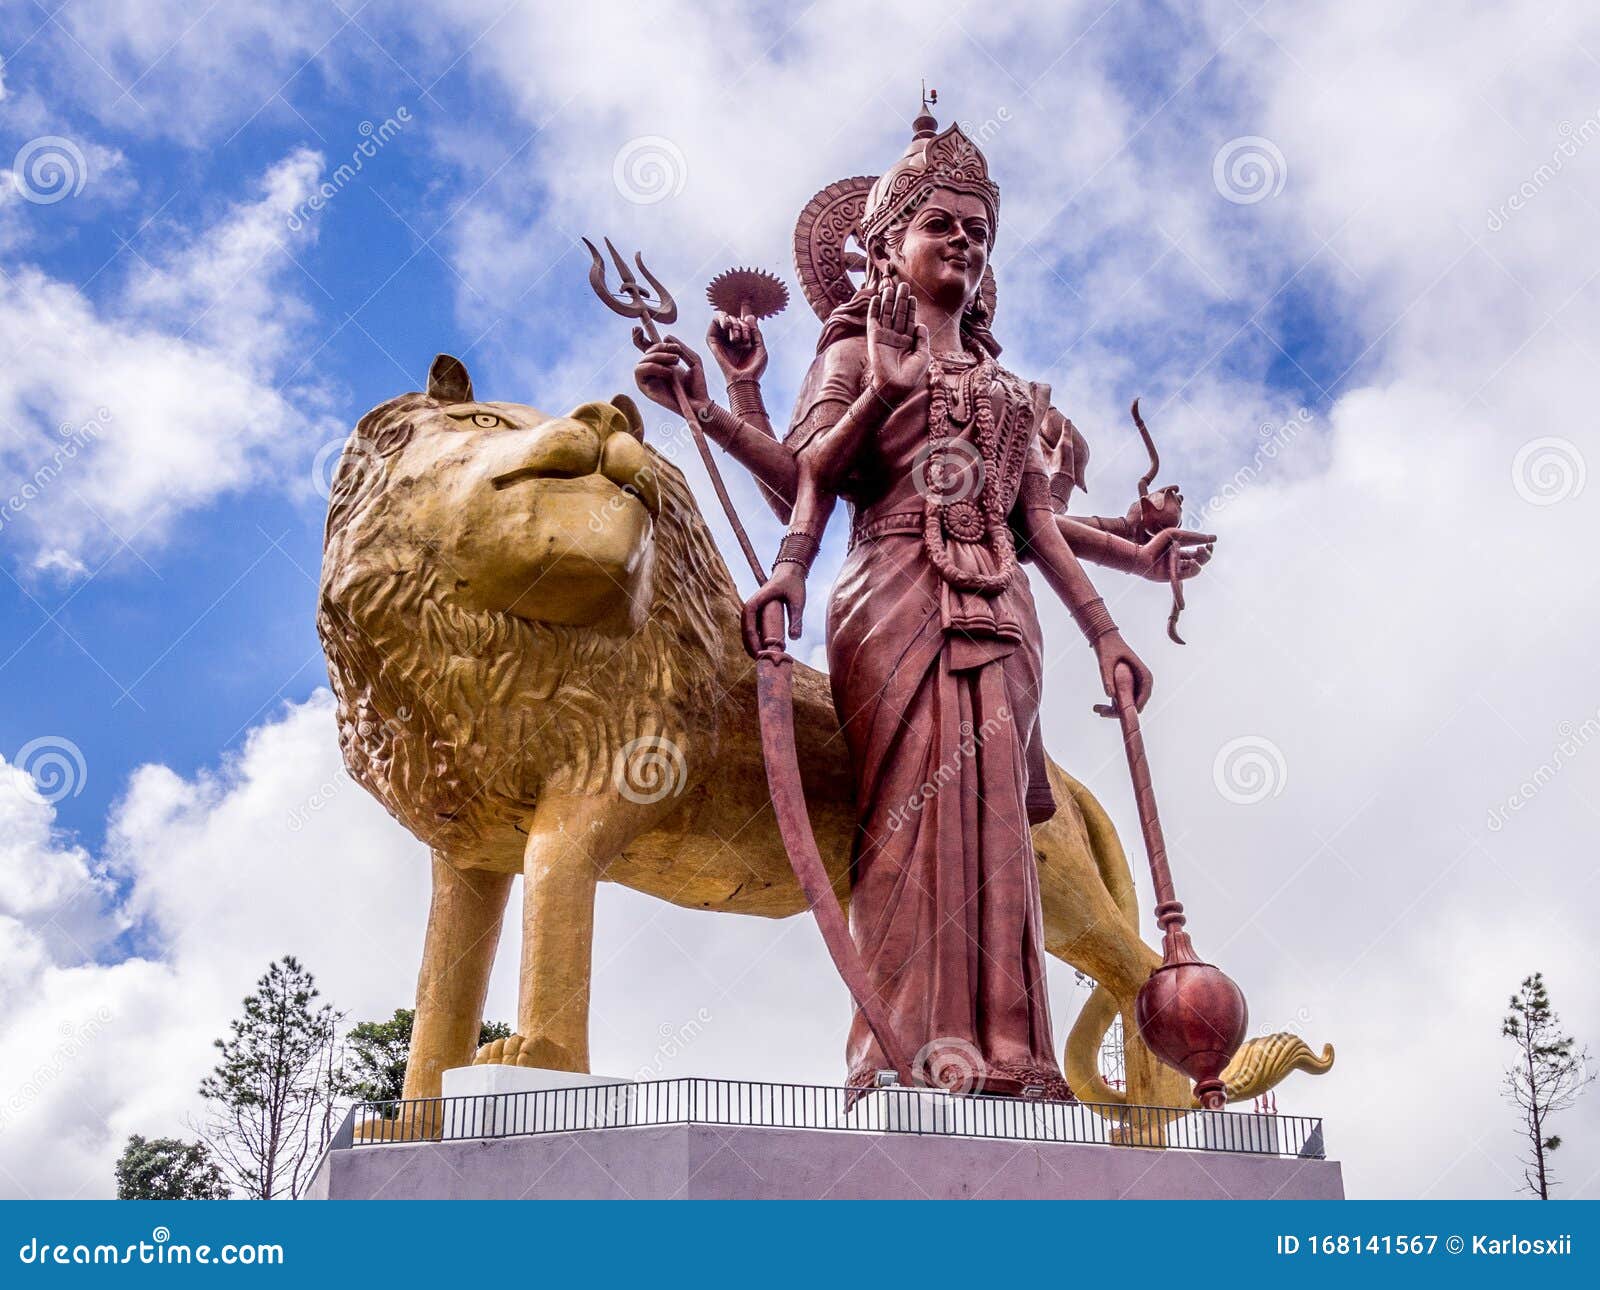 Durga Mata Statue At Grand Bassin Aka Ganga Talao Crater Lake In The Centre Of Mauritius Stock Image Image Of Cloud Sunny 168141567